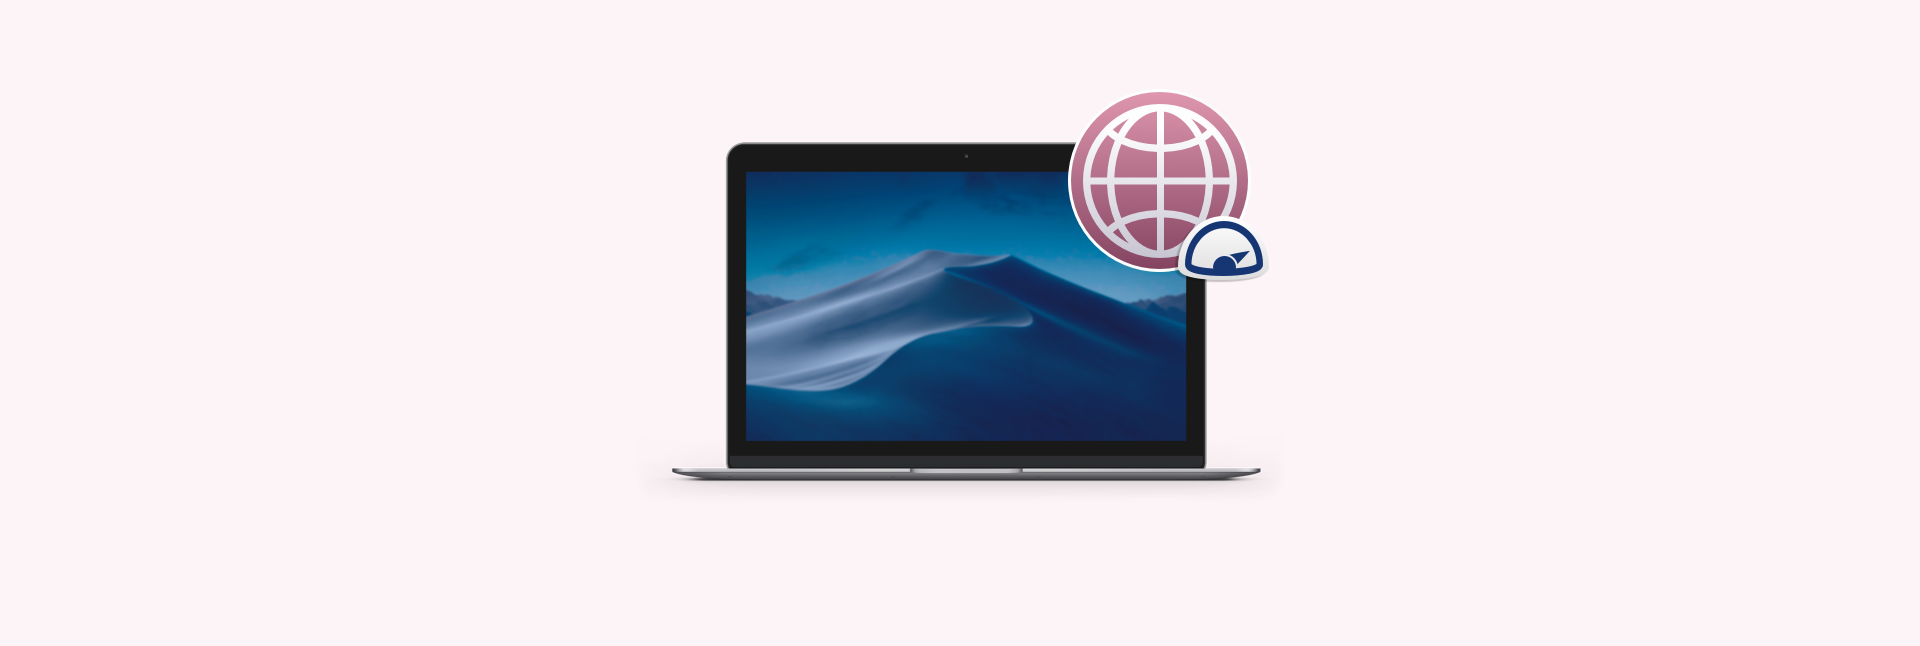 best internet download manager for apple mac 2016